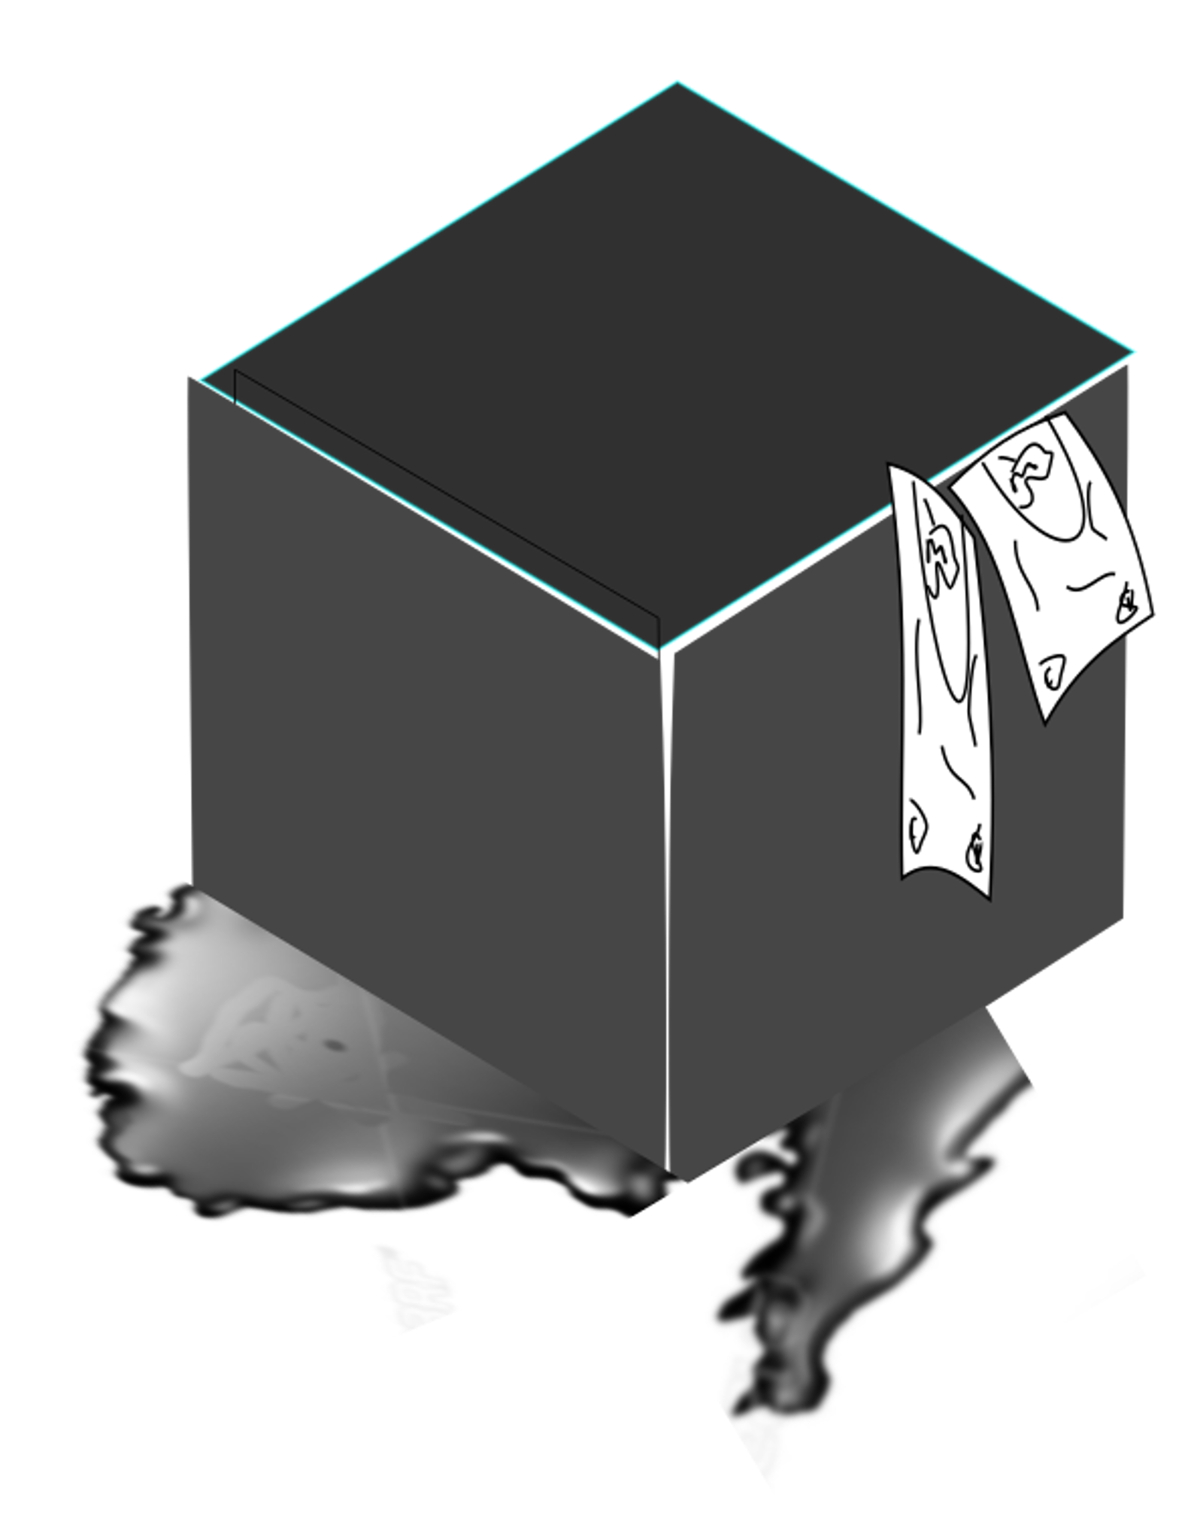 Black Box representing "black-box investments" leaking oil